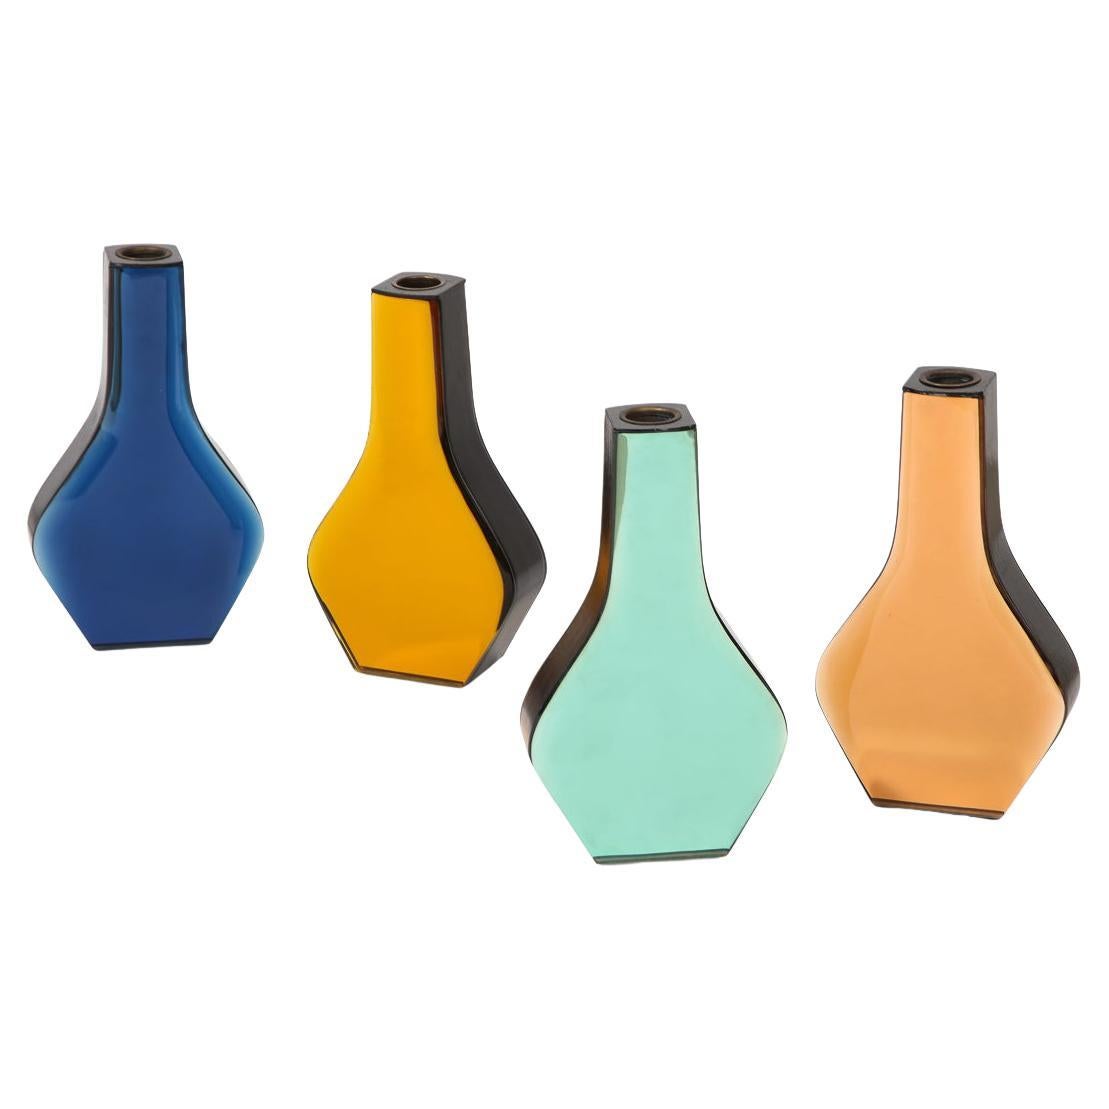 Rare, Colored Glass Vases, Model No. 2122, by Max Ingrand for Fontana Arte